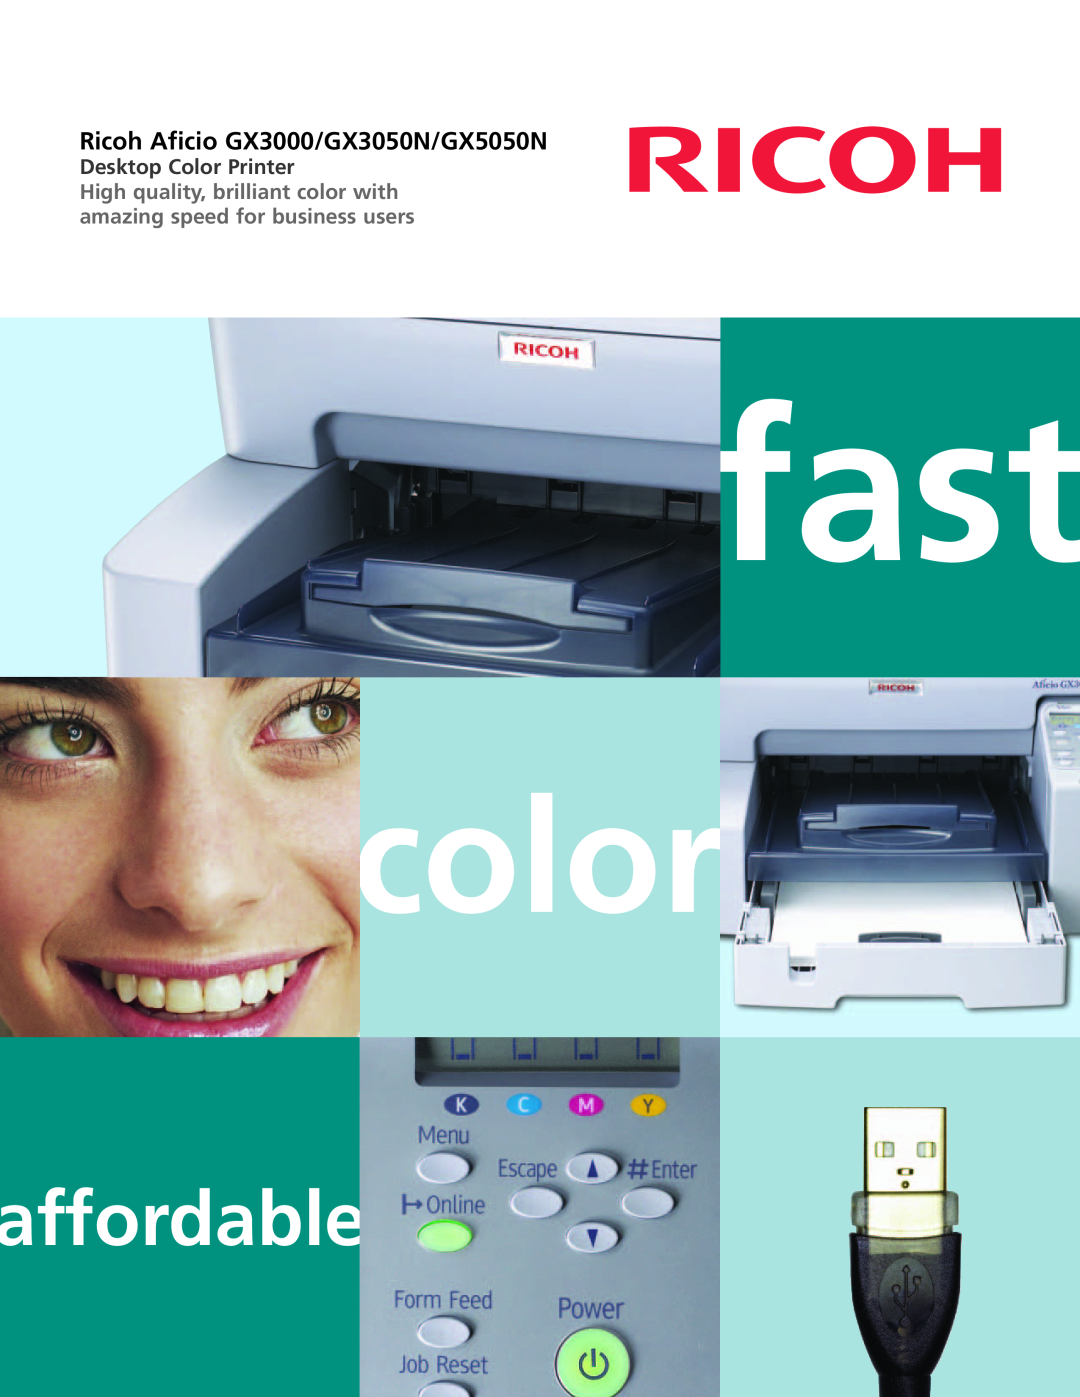 Ricoh manual fast, color, affordable, Ricoh Aficio GX3000/GX3050N/GX5050N, Desktop Color Printer 